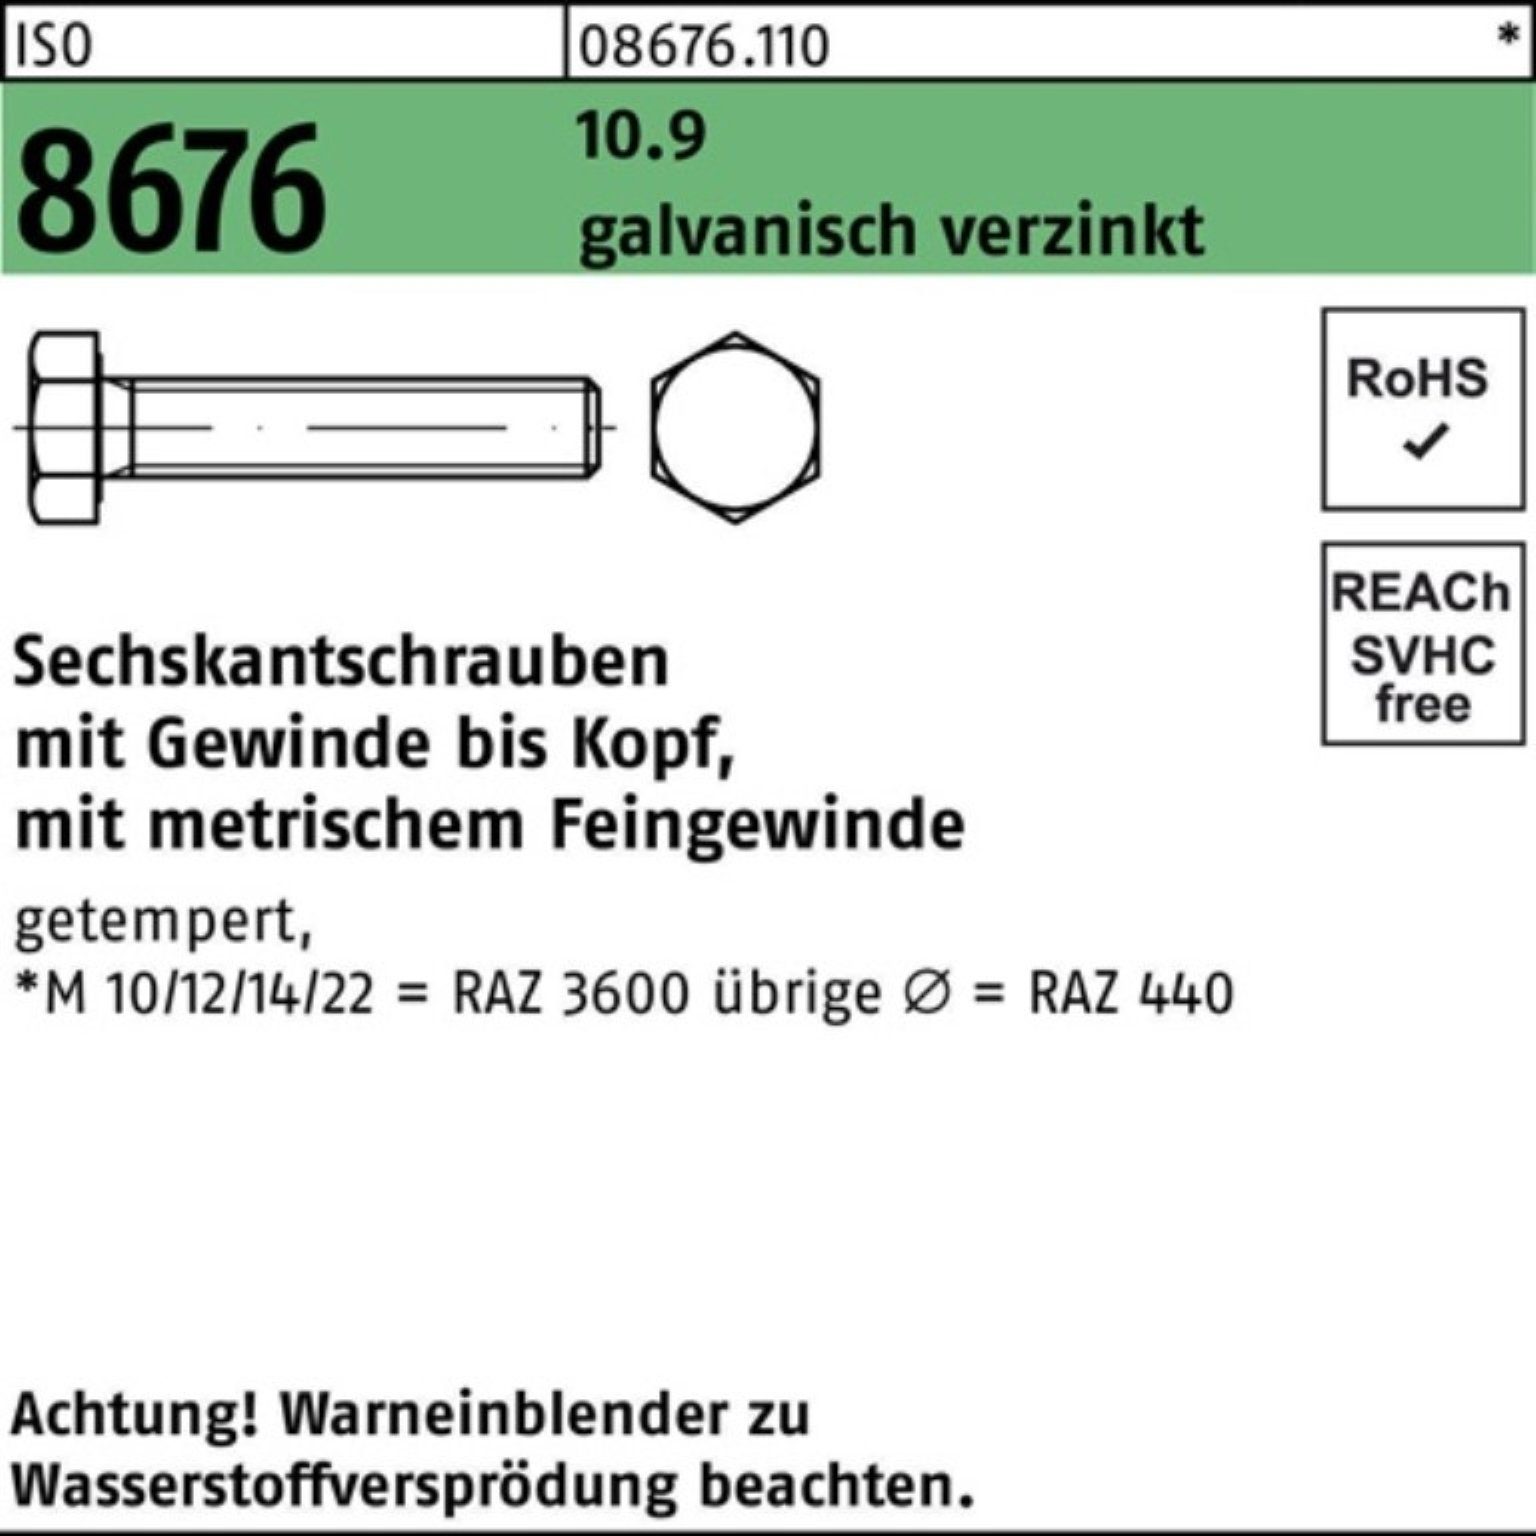 Reyher Sechskantschraube 200er Pack Sechskantschraube M8x1x 200 8676 10.9 galv.verz. 25 ISO VG